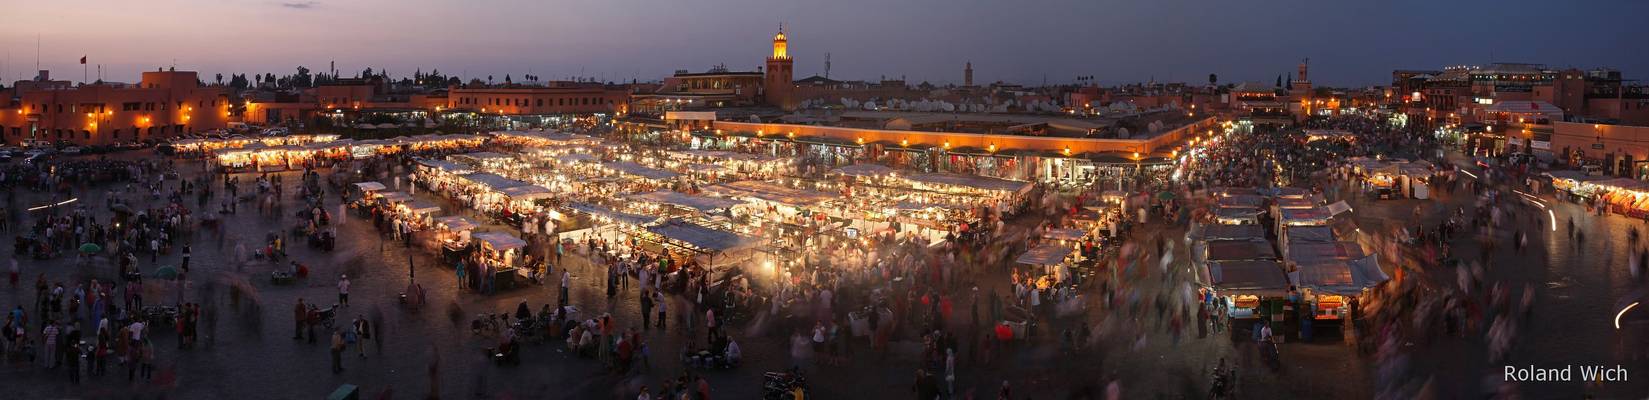 Marrakech - Djemaa el Fna at dusk